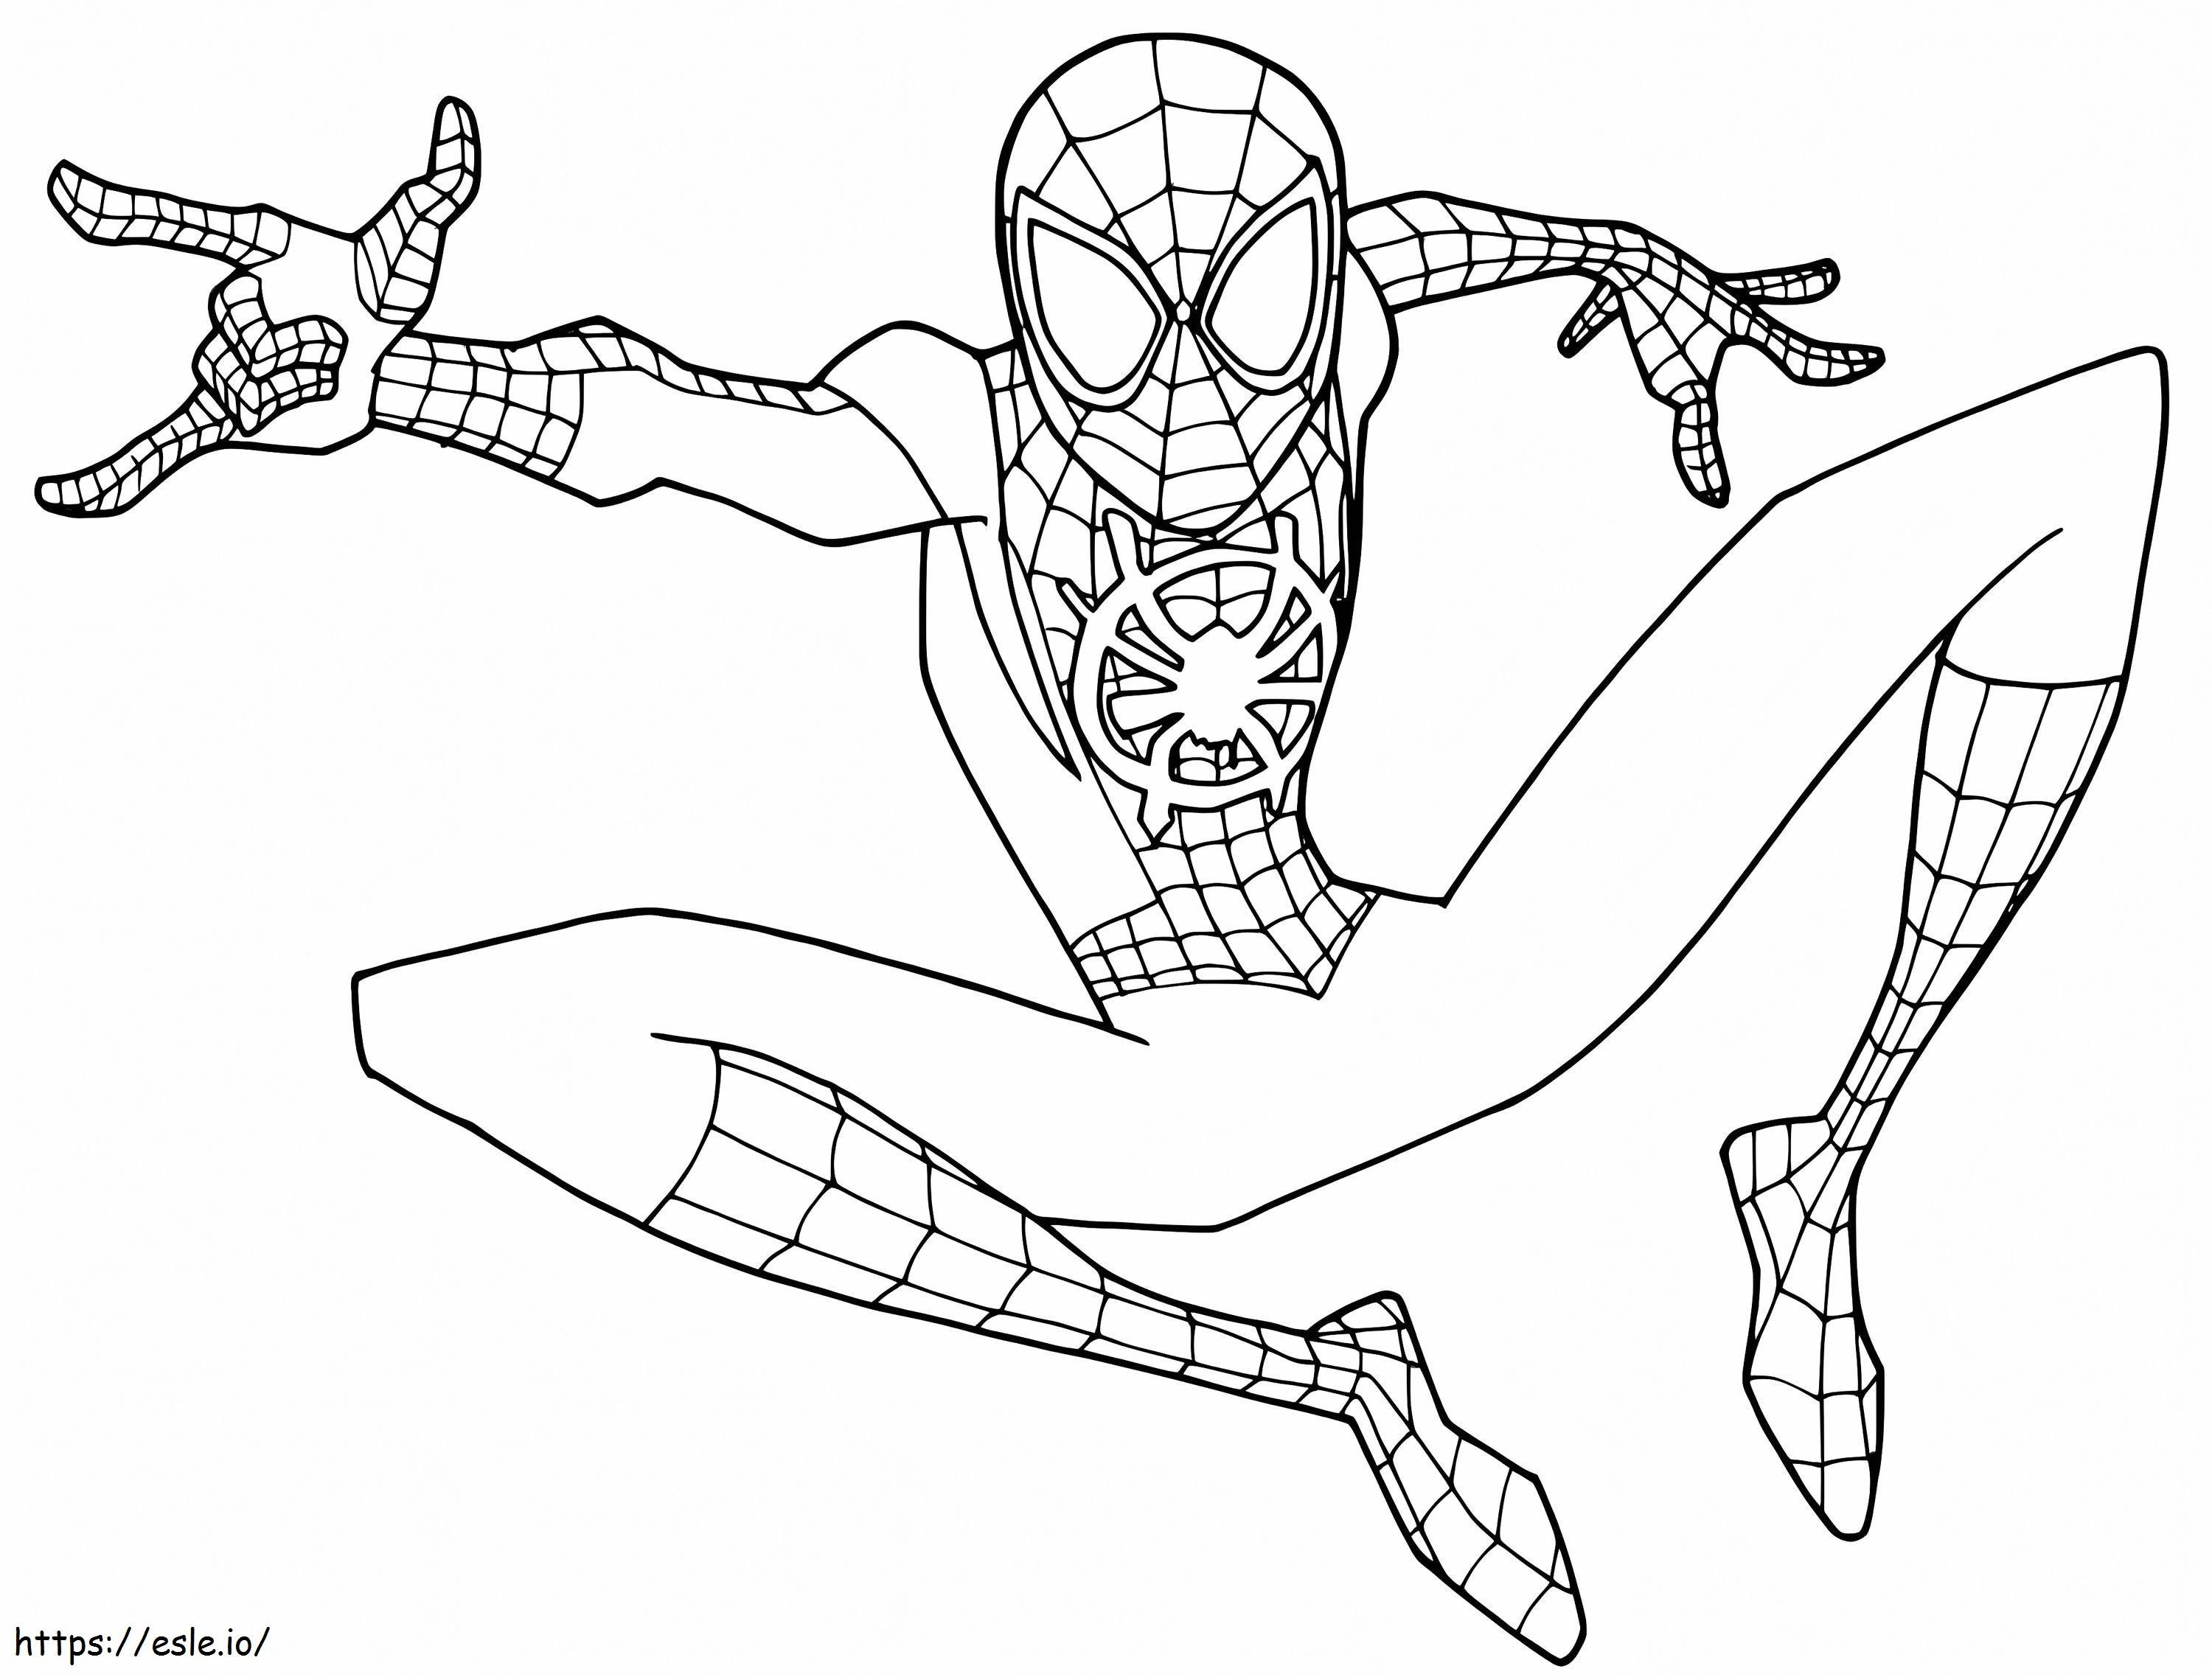 Coloriage Spider-Man Miles Morales à imprimer dessin